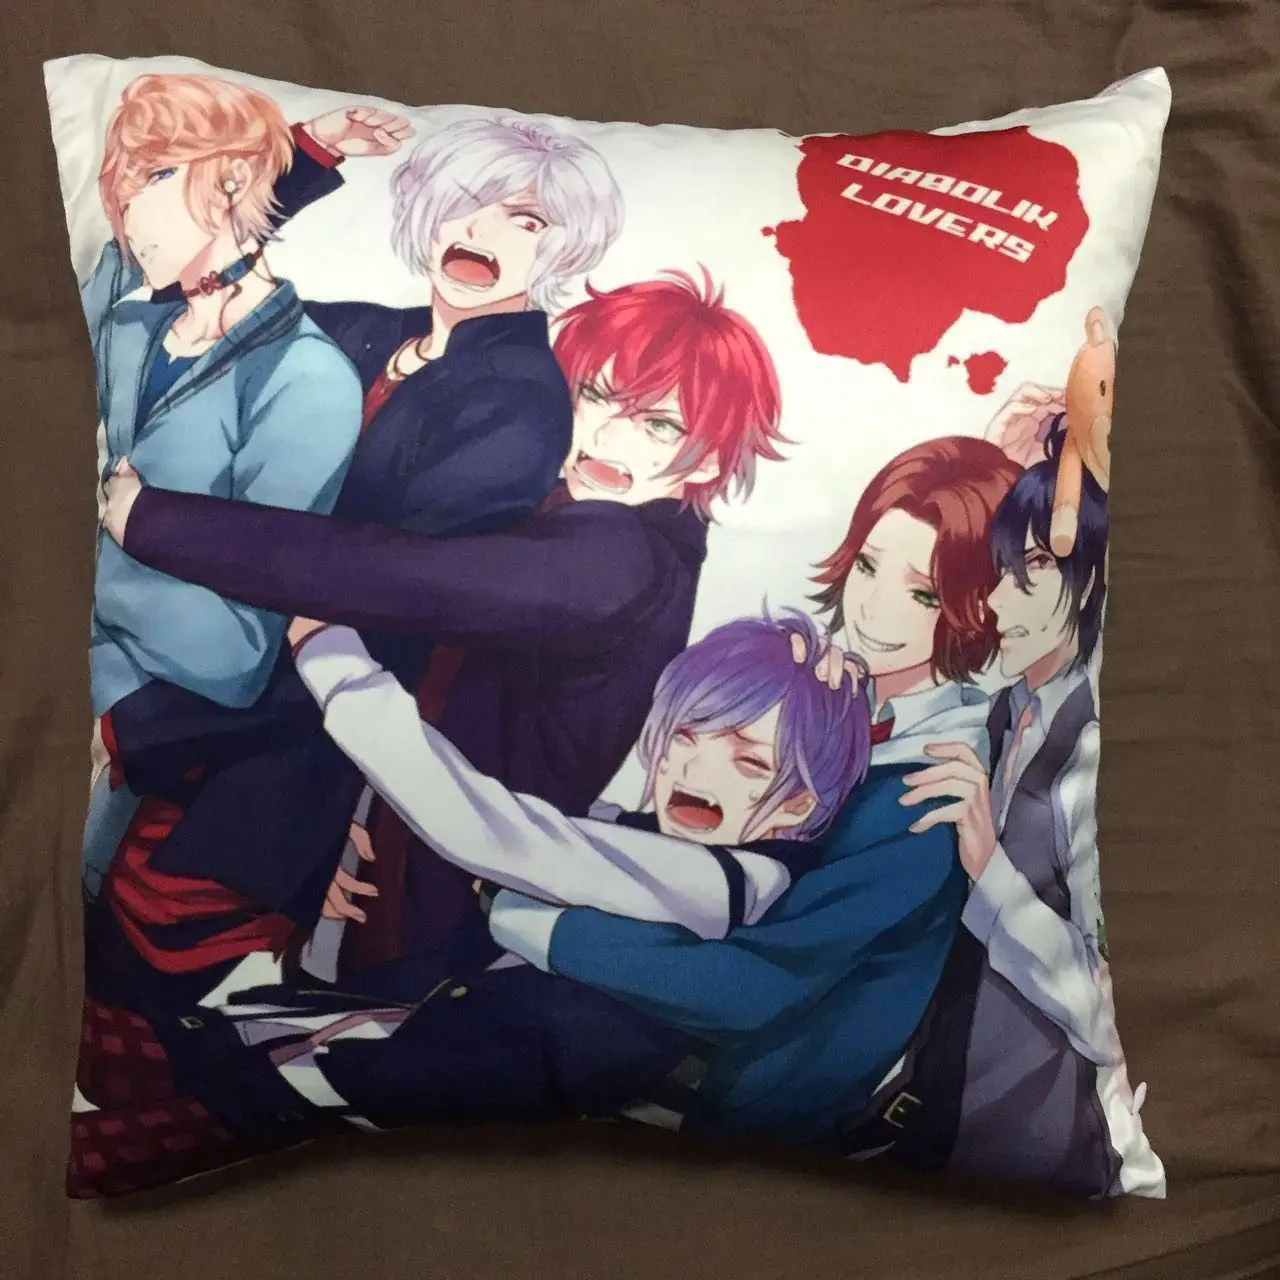 Neu Anime Diabolik Lovers Kissen Kopfkissen Sofa Dekokissen Bezug Pillow 40x40CM 